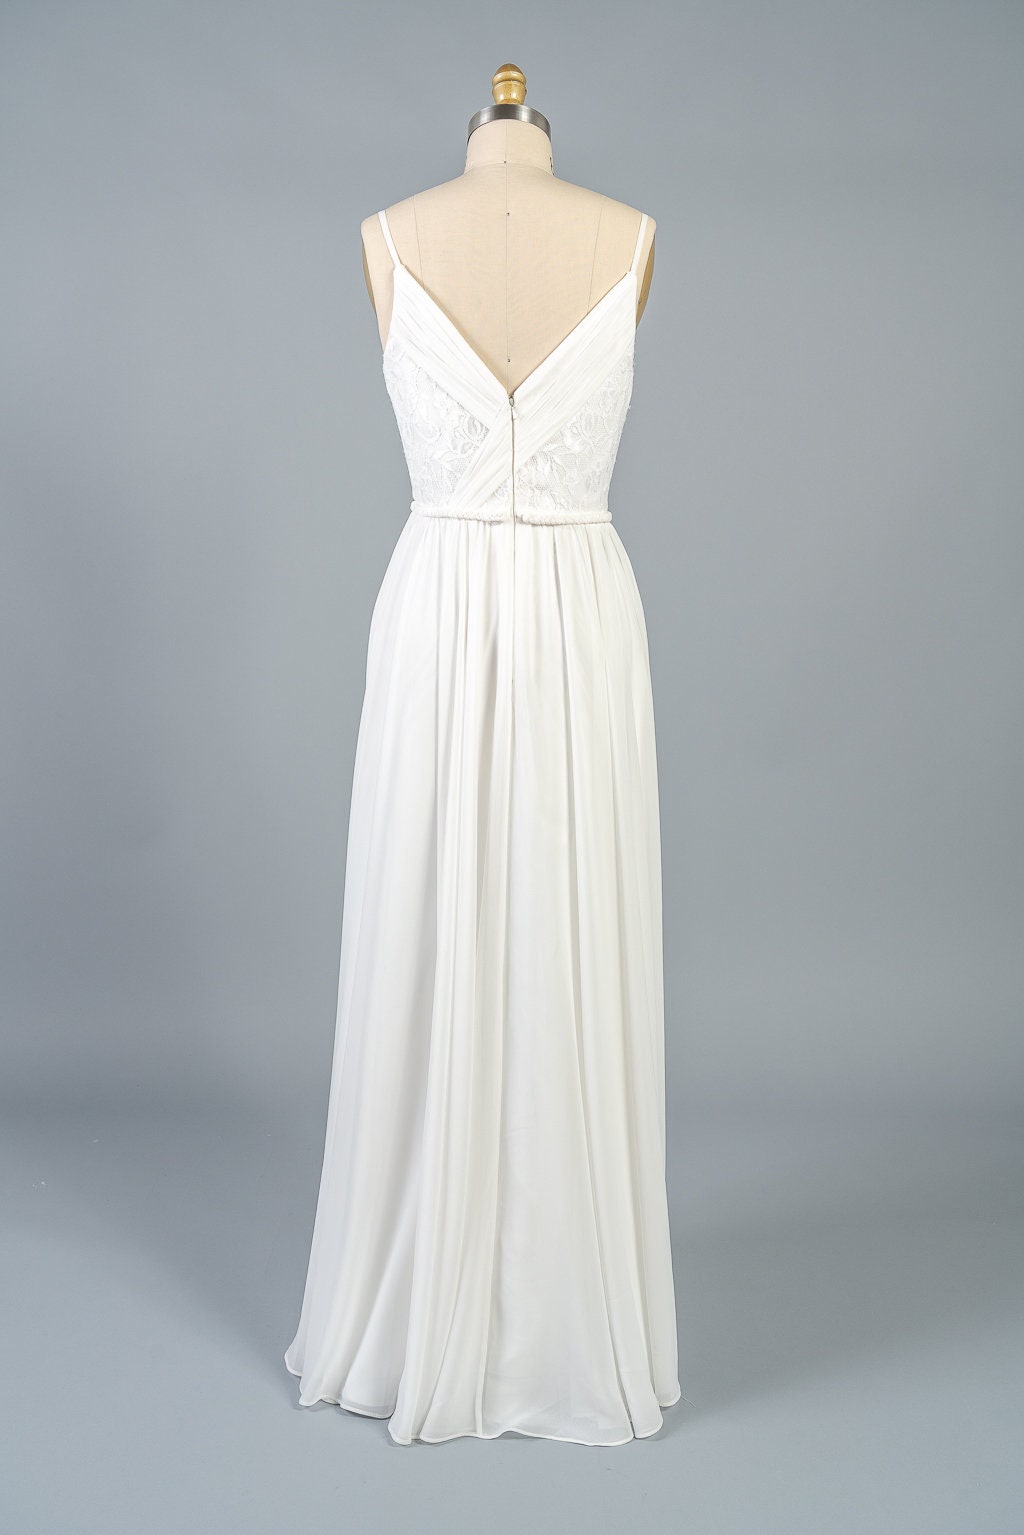 Chiffon/lace Light Wedding Dress With Braided Belt - Etsy Canada